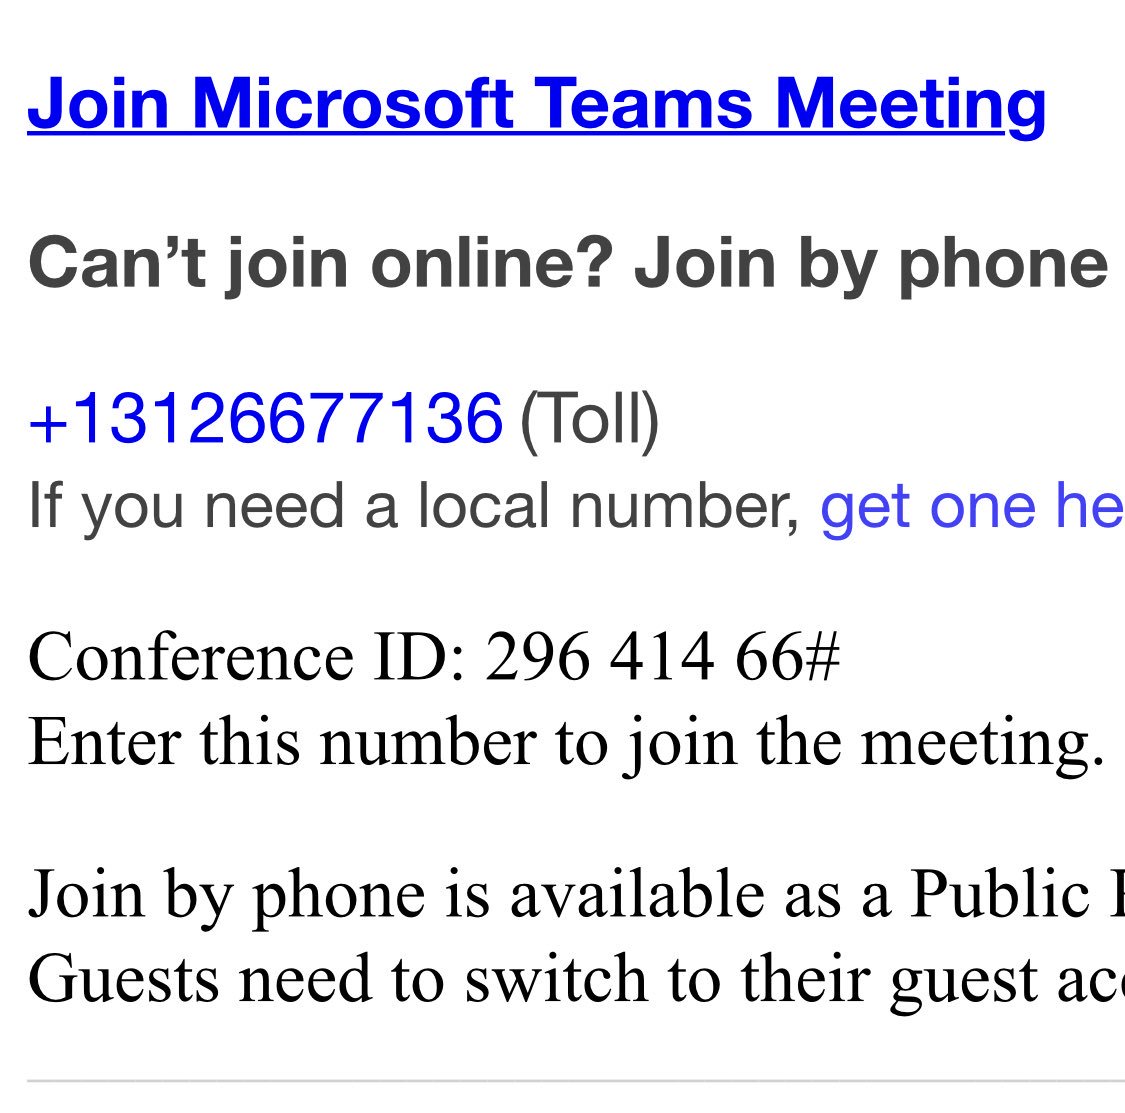 Hot off the press: all about #audioconferencing in @MicrosoftTeams #tutorial 

docs.microsoft.com/en-us/Microsof…